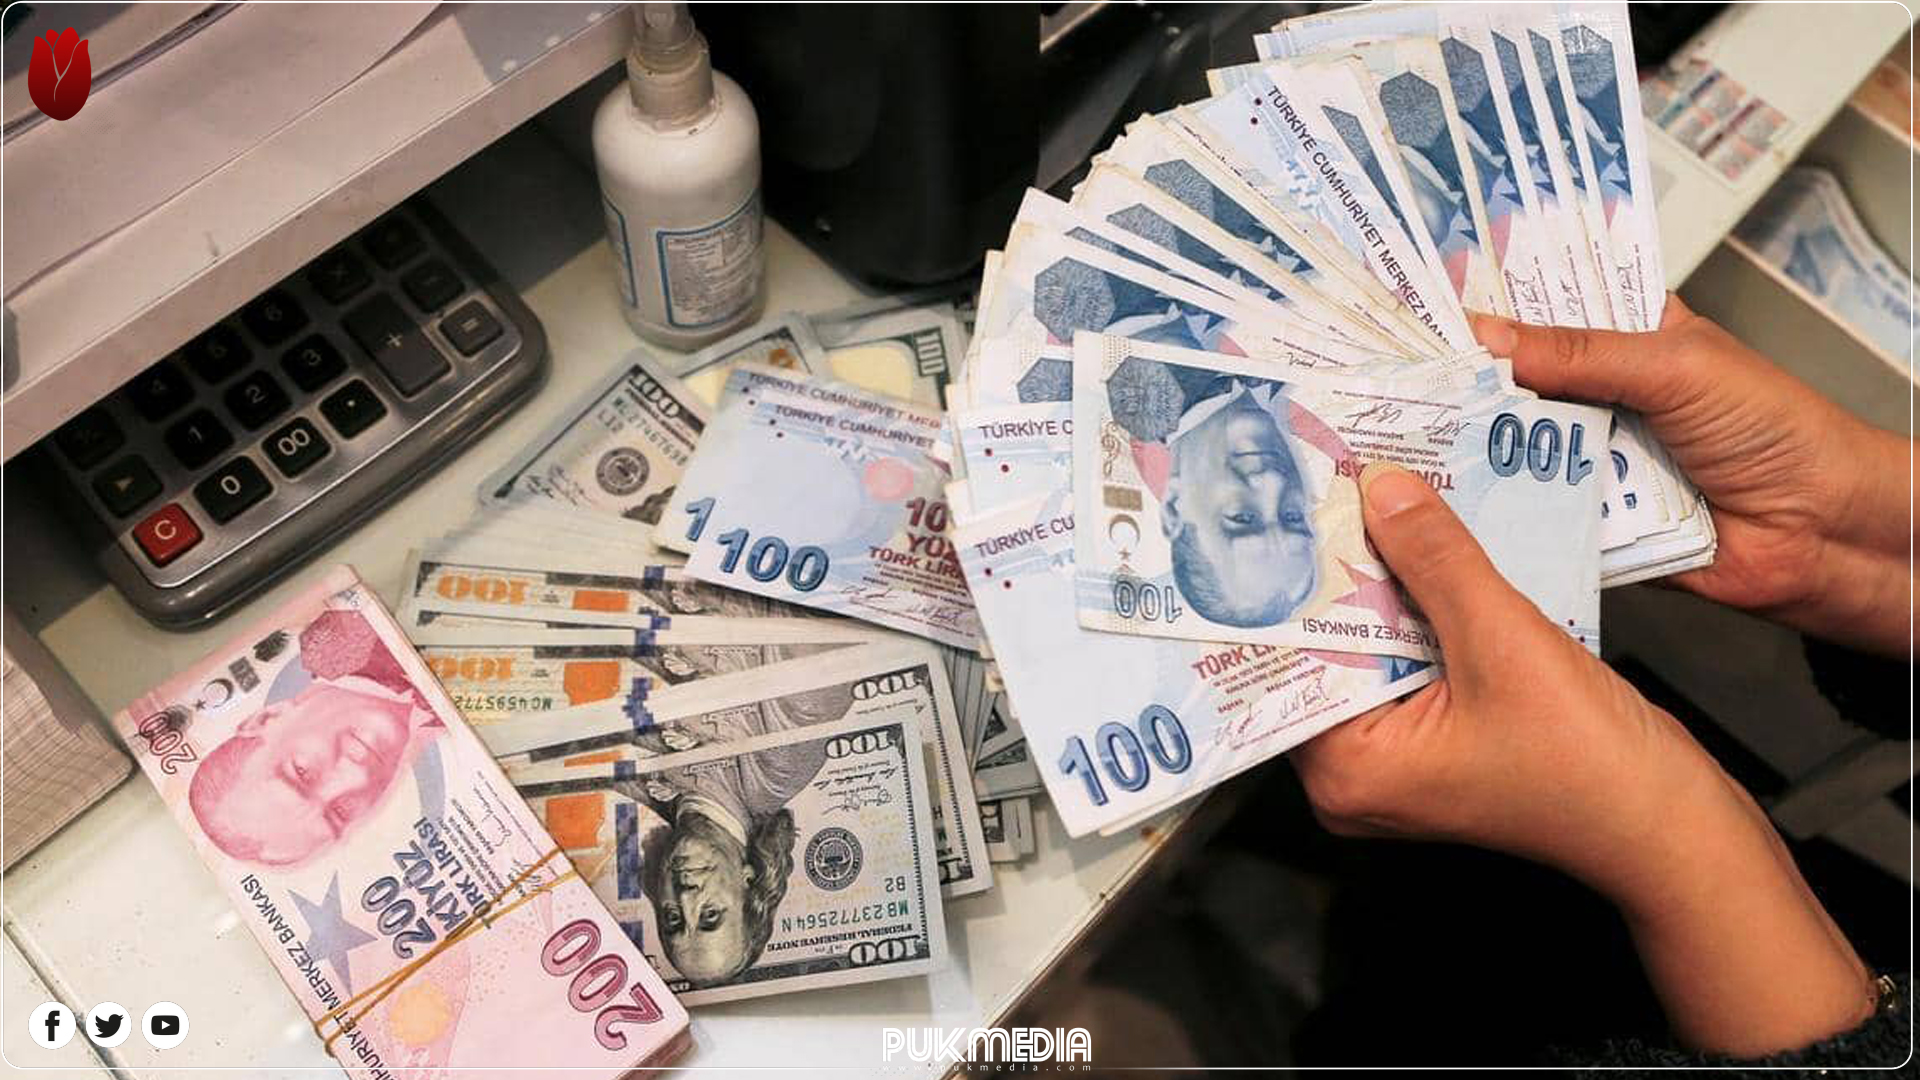  The illustration shows Turkish lira alongside US dollars. (Photo Credit: Getty Images)